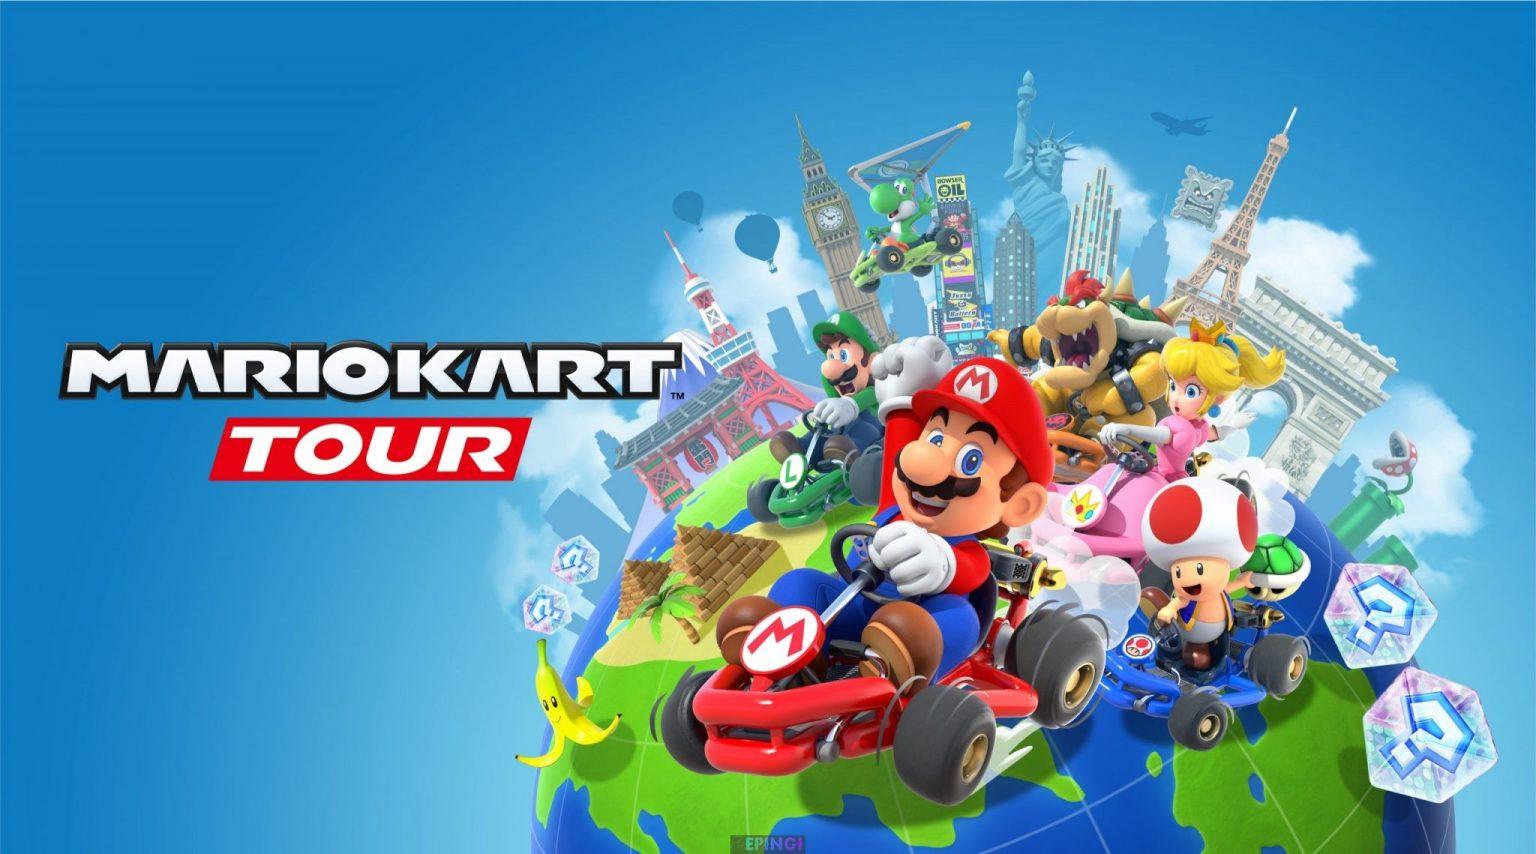 Mario Kart Tour PC Latest Version Game Free Download